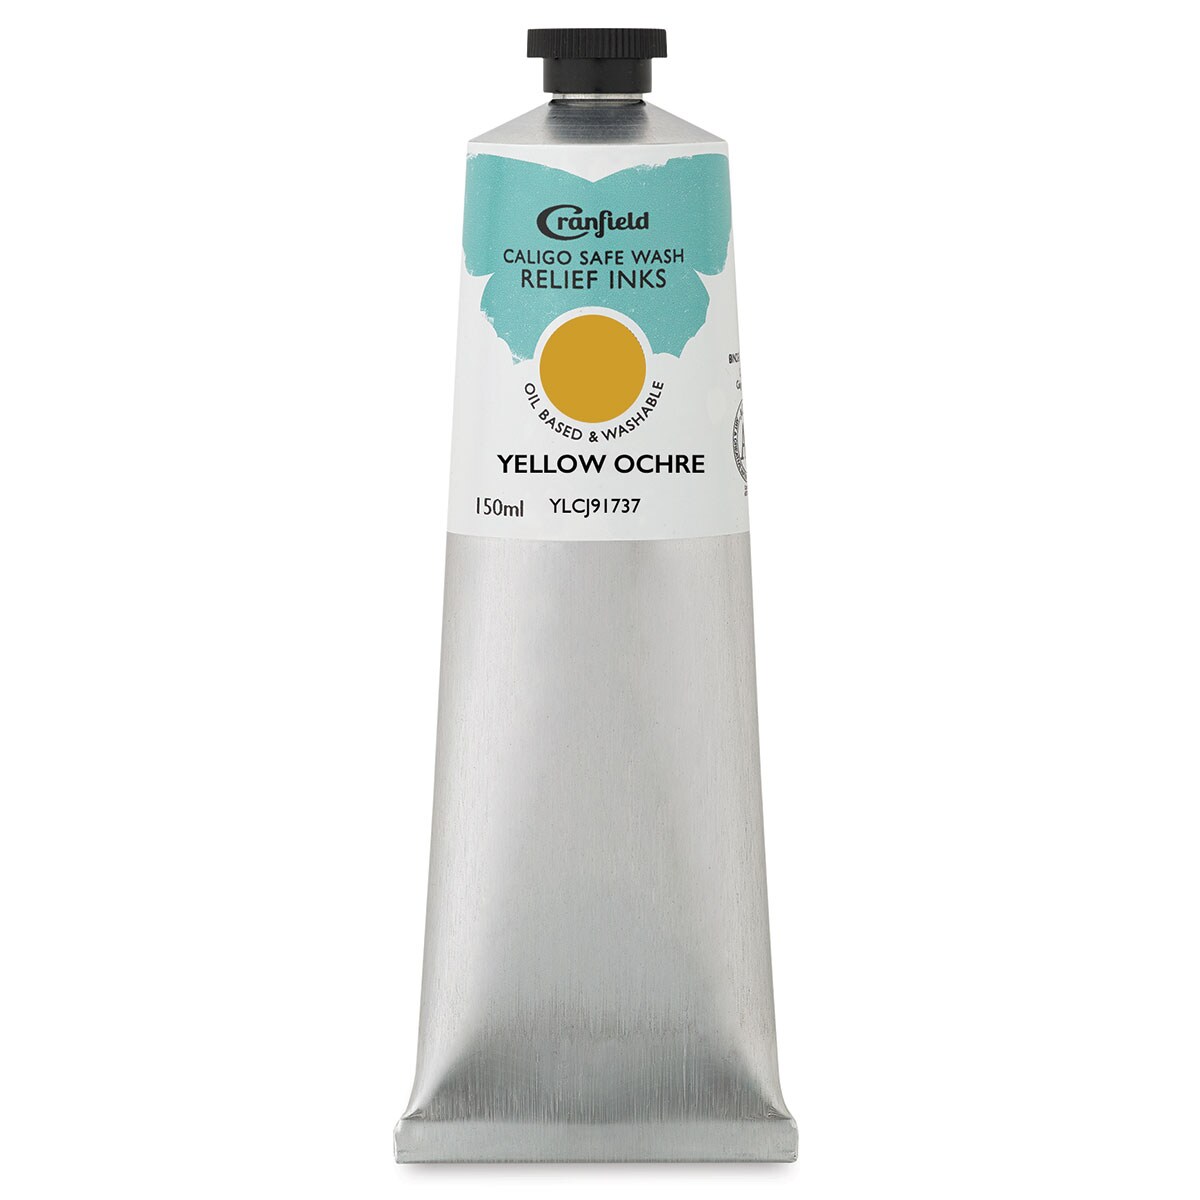 Cranfield Caligo Safe Wash Relief Ink - Yellow Ochre, 150 ml